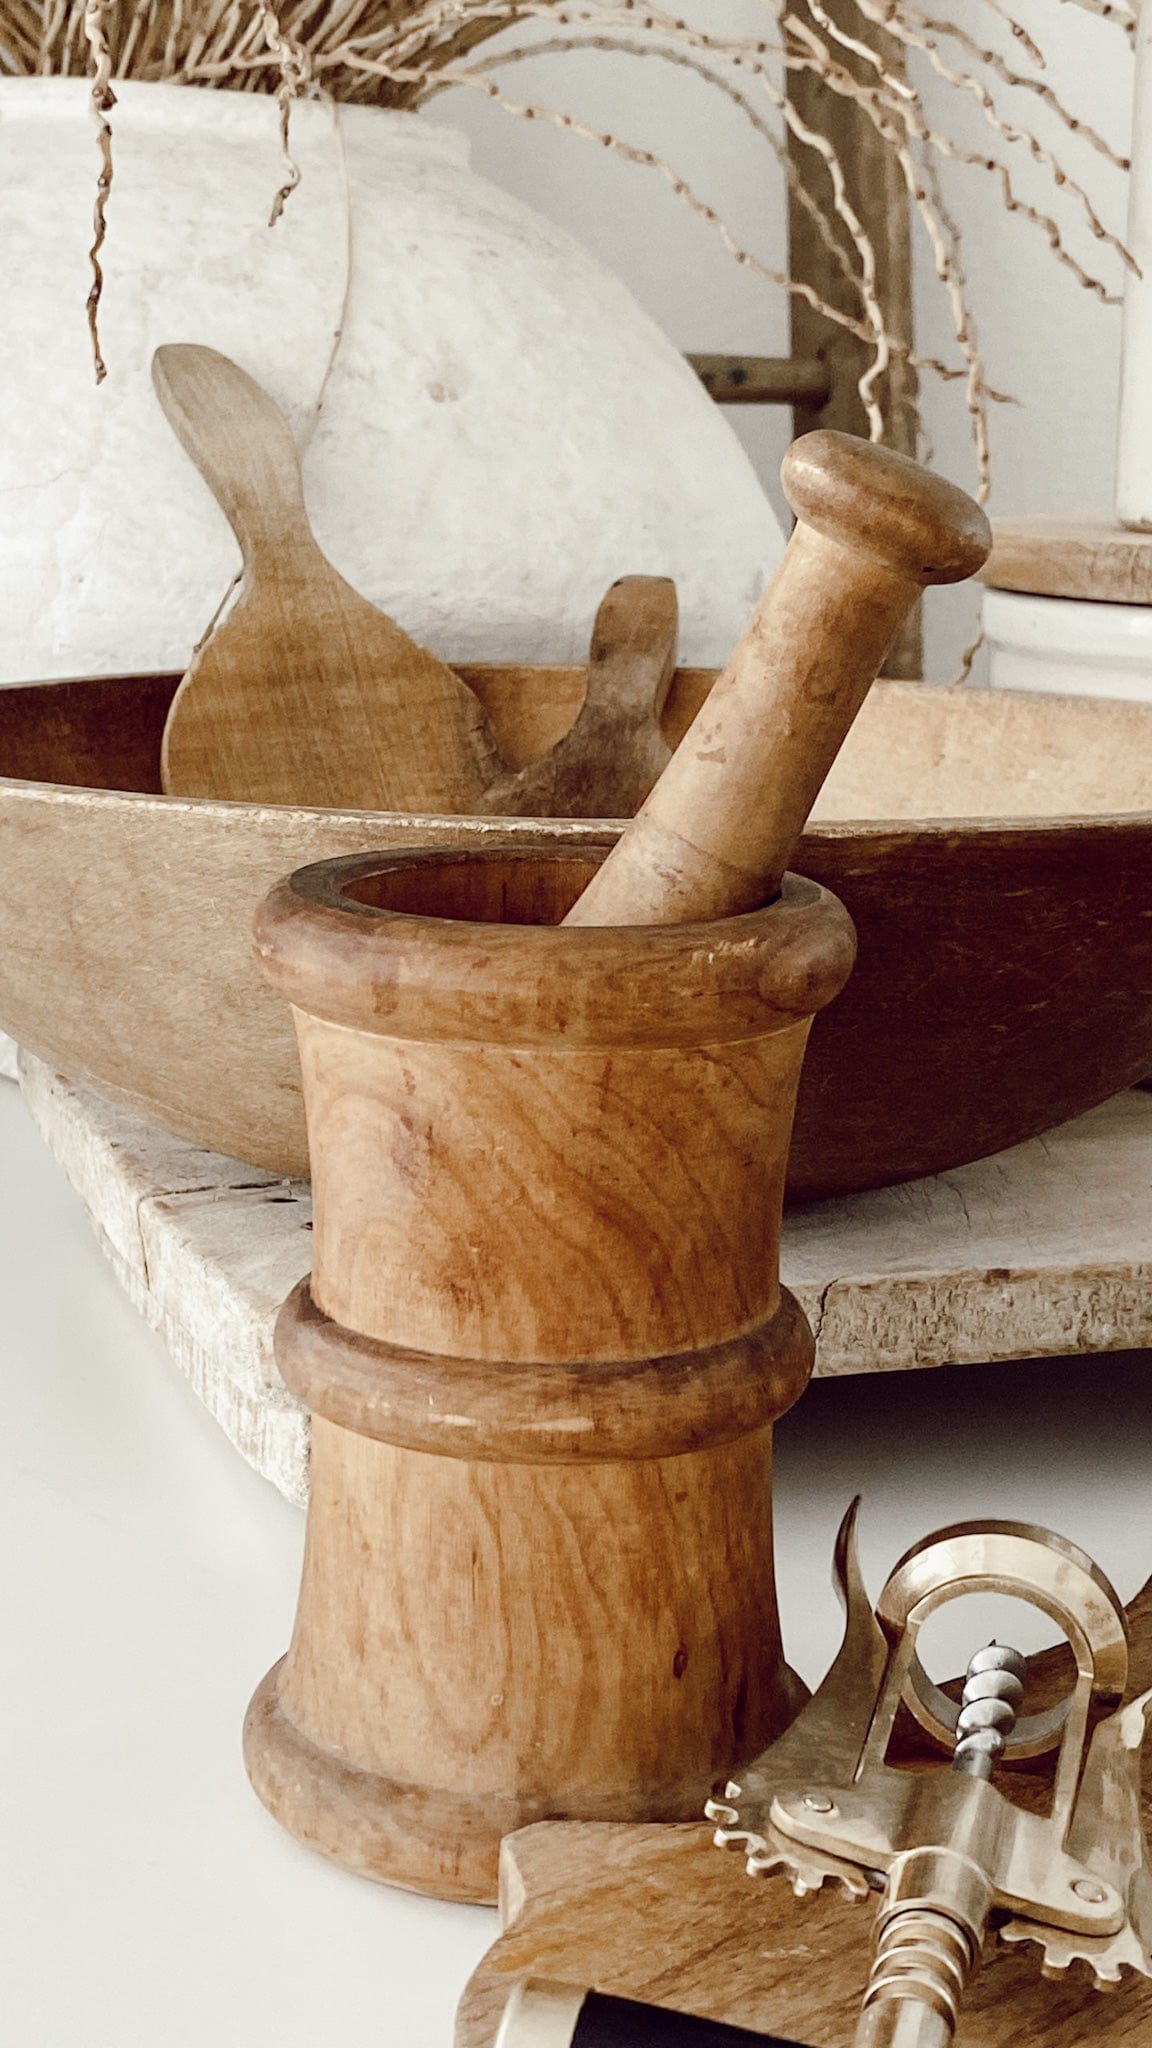 Vintage Hand Made Wood Mortar & Pestle kitchen tool